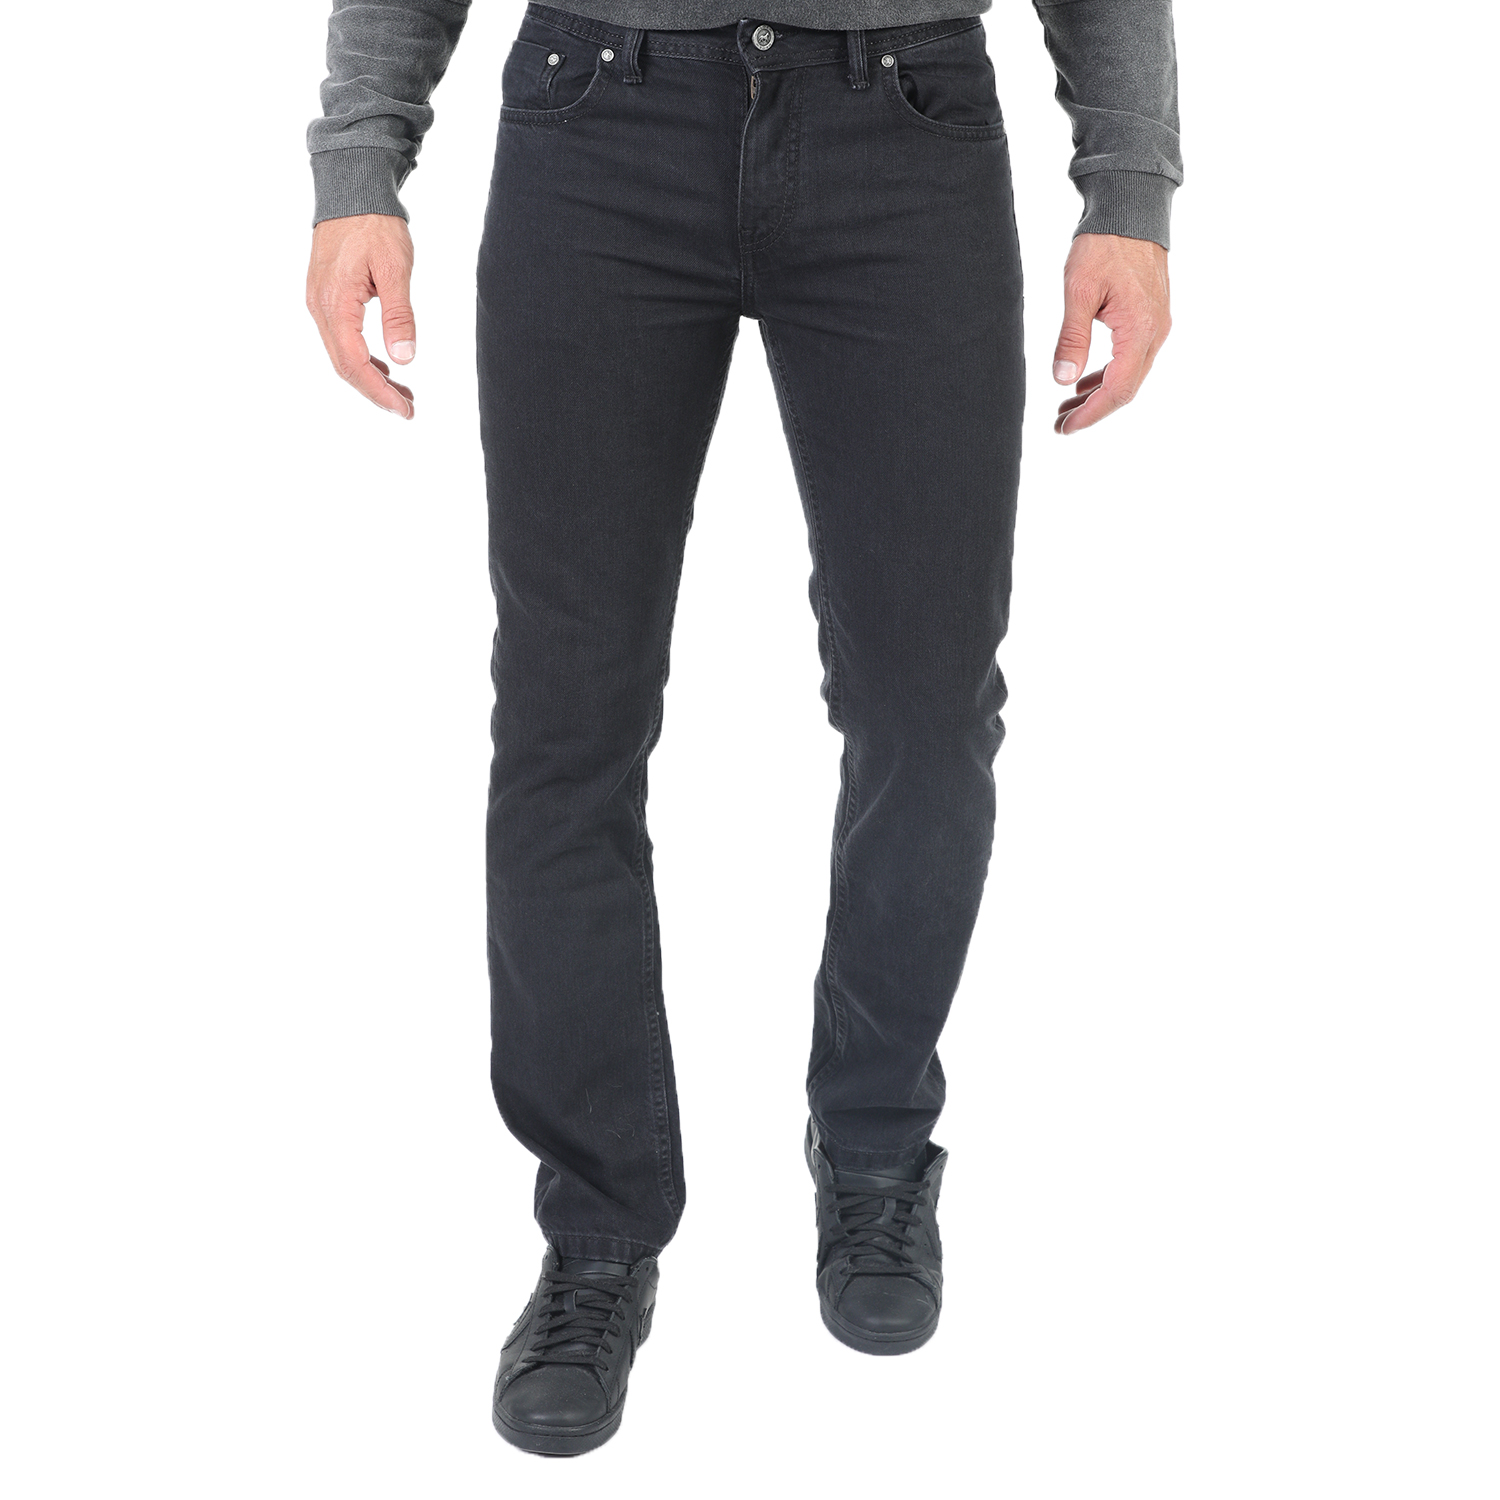 CATAMARAN SAILWEAR - Ανδρικό jean παντελόνι CATAMARAN SAILWEAR μαύρο